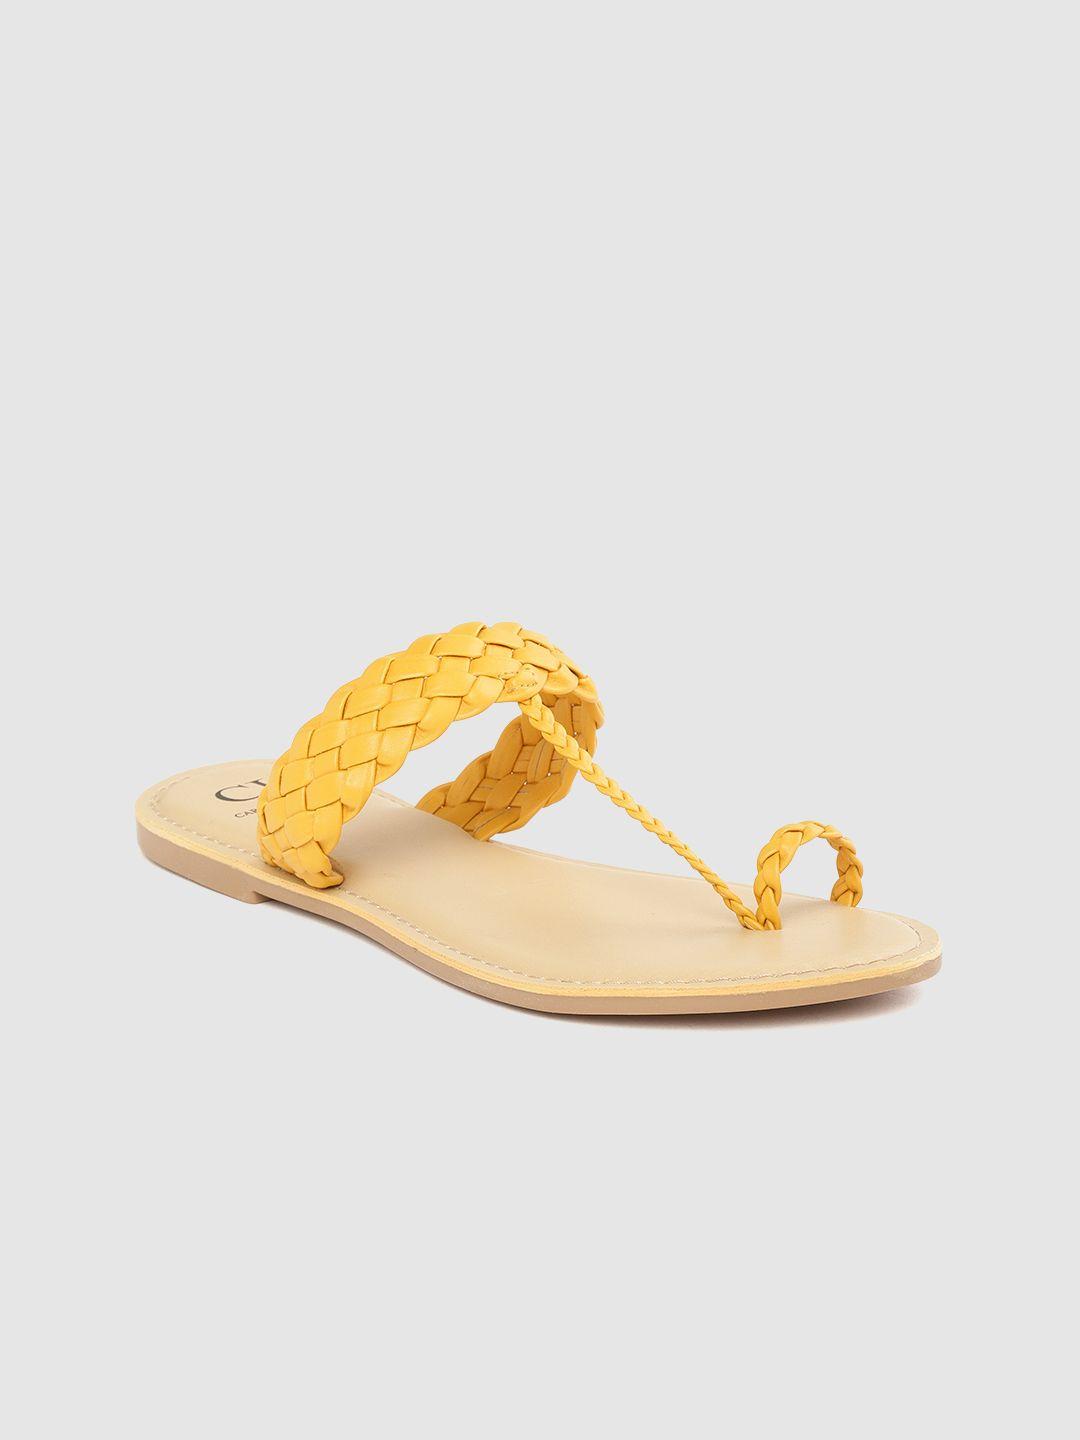 carlton london women mustard yellow braided one toe flats